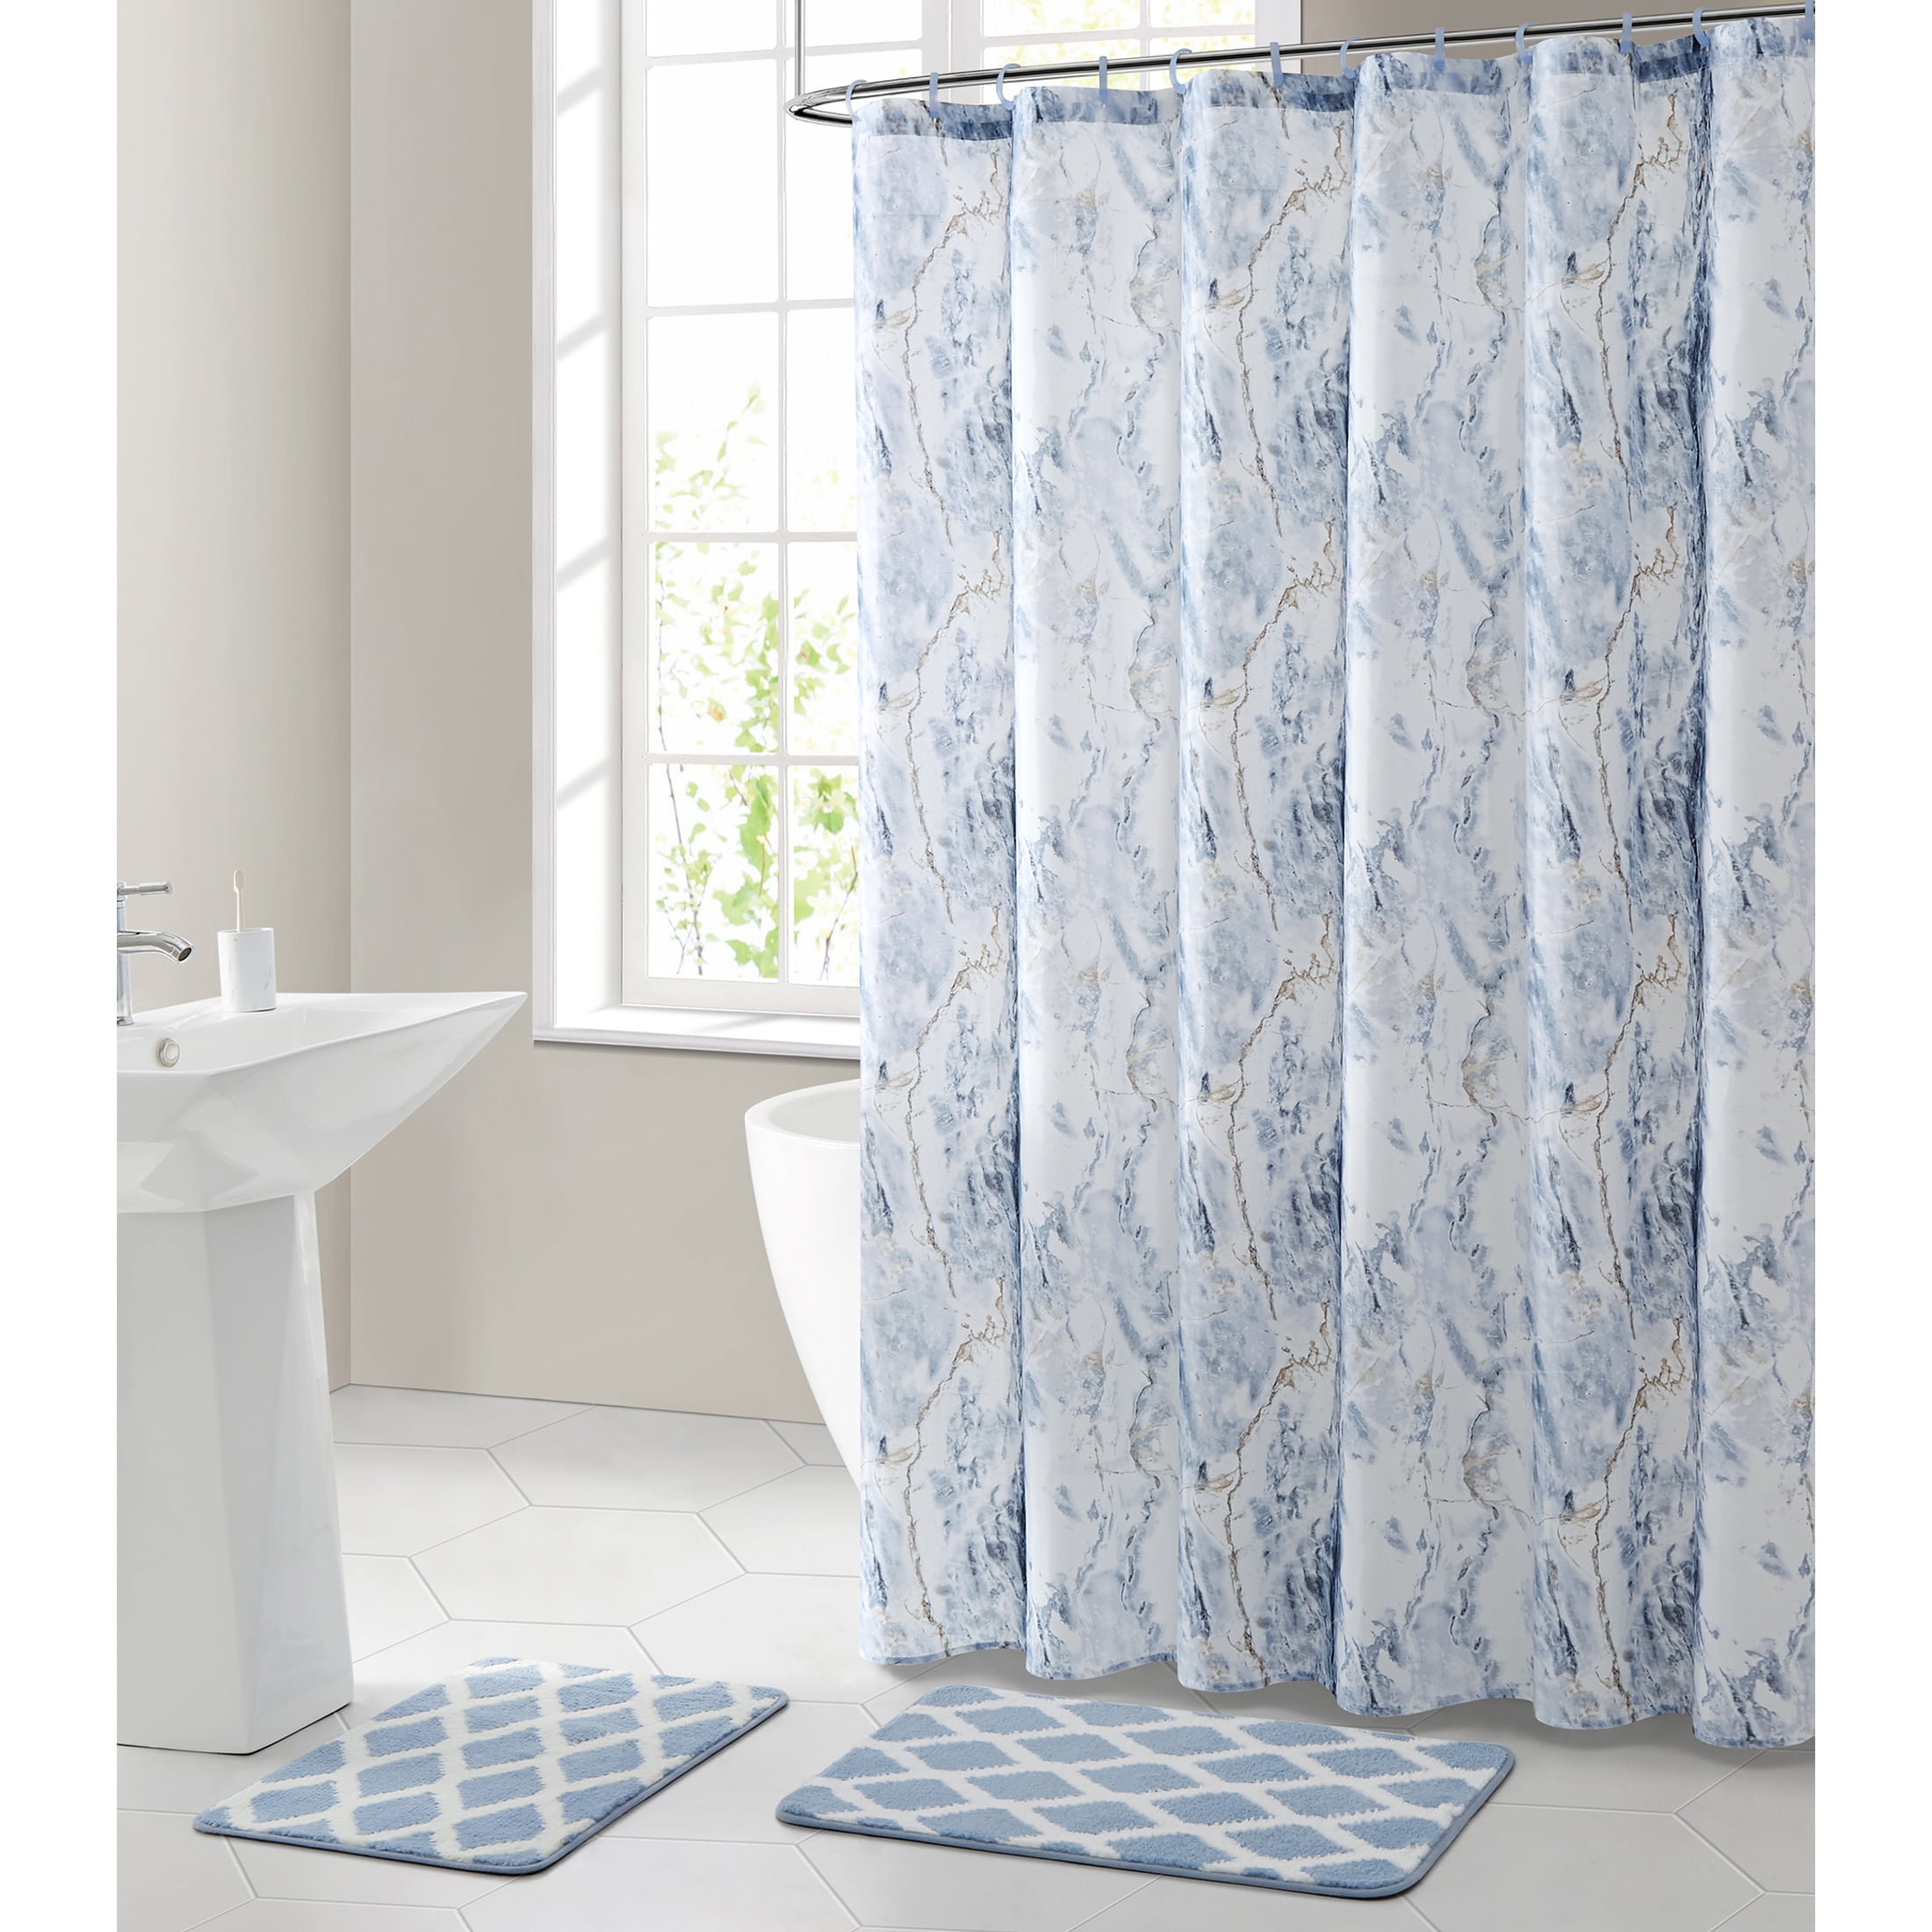 Horse In Swamp Animal Decor Bathroom Fabric Shower Curtain Set 71X71 Inches 